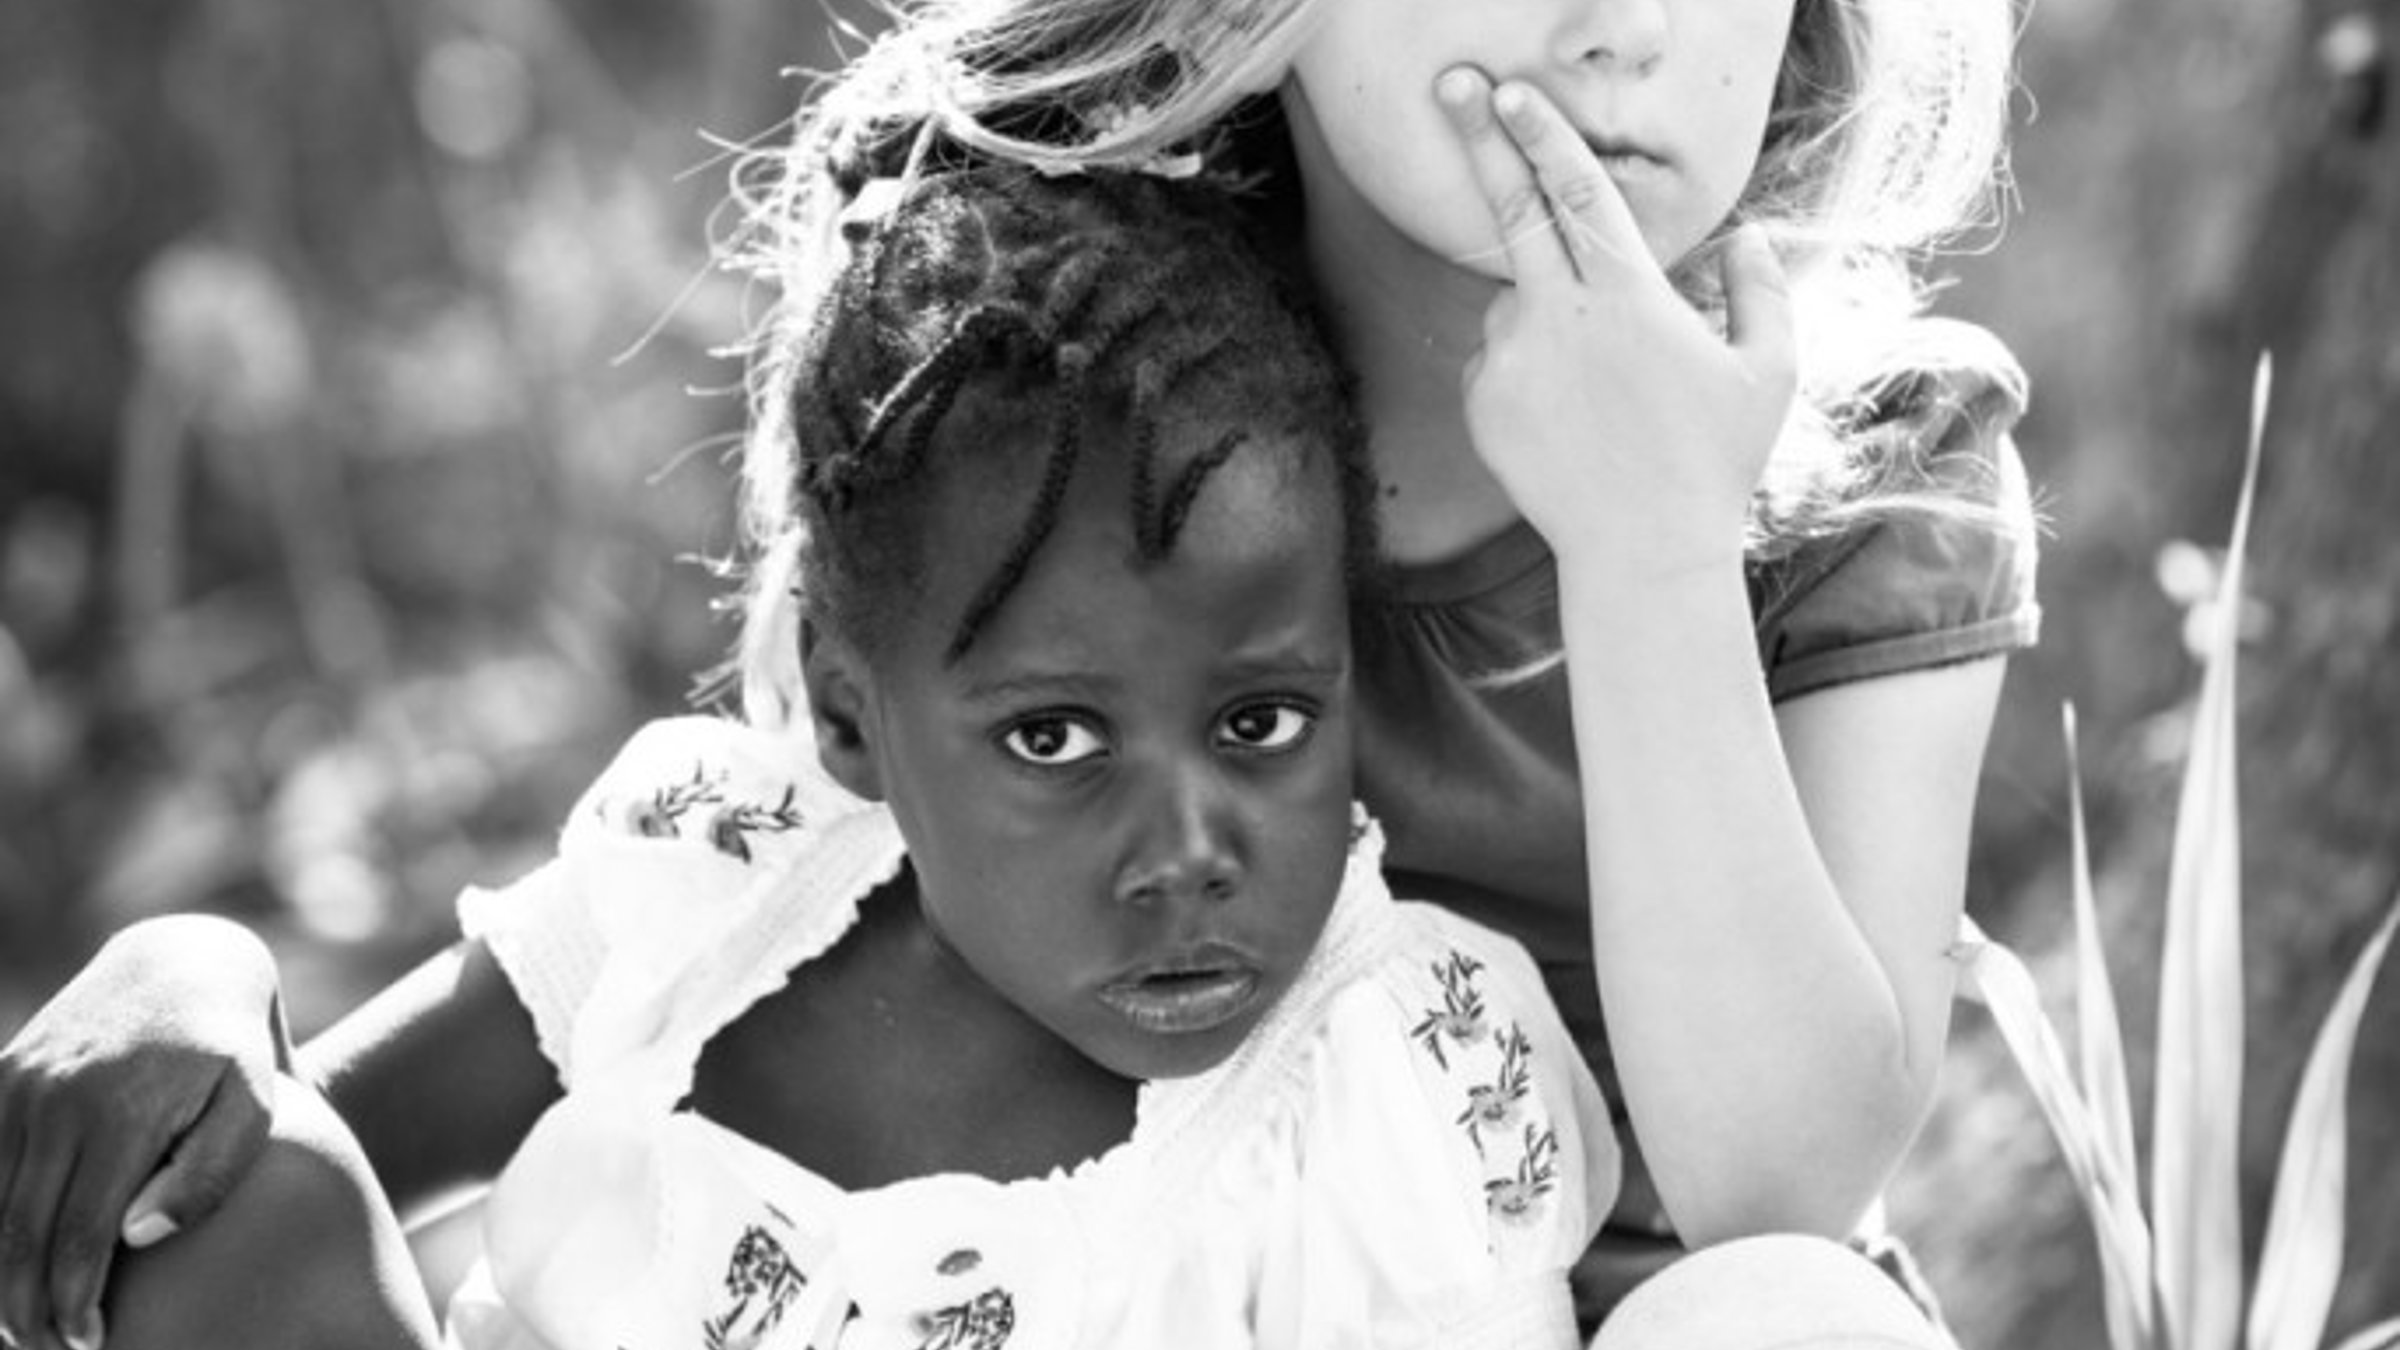 children-portrait-photography-Ibiza-Gypsy-Westwood-Photographer-4-684x1024